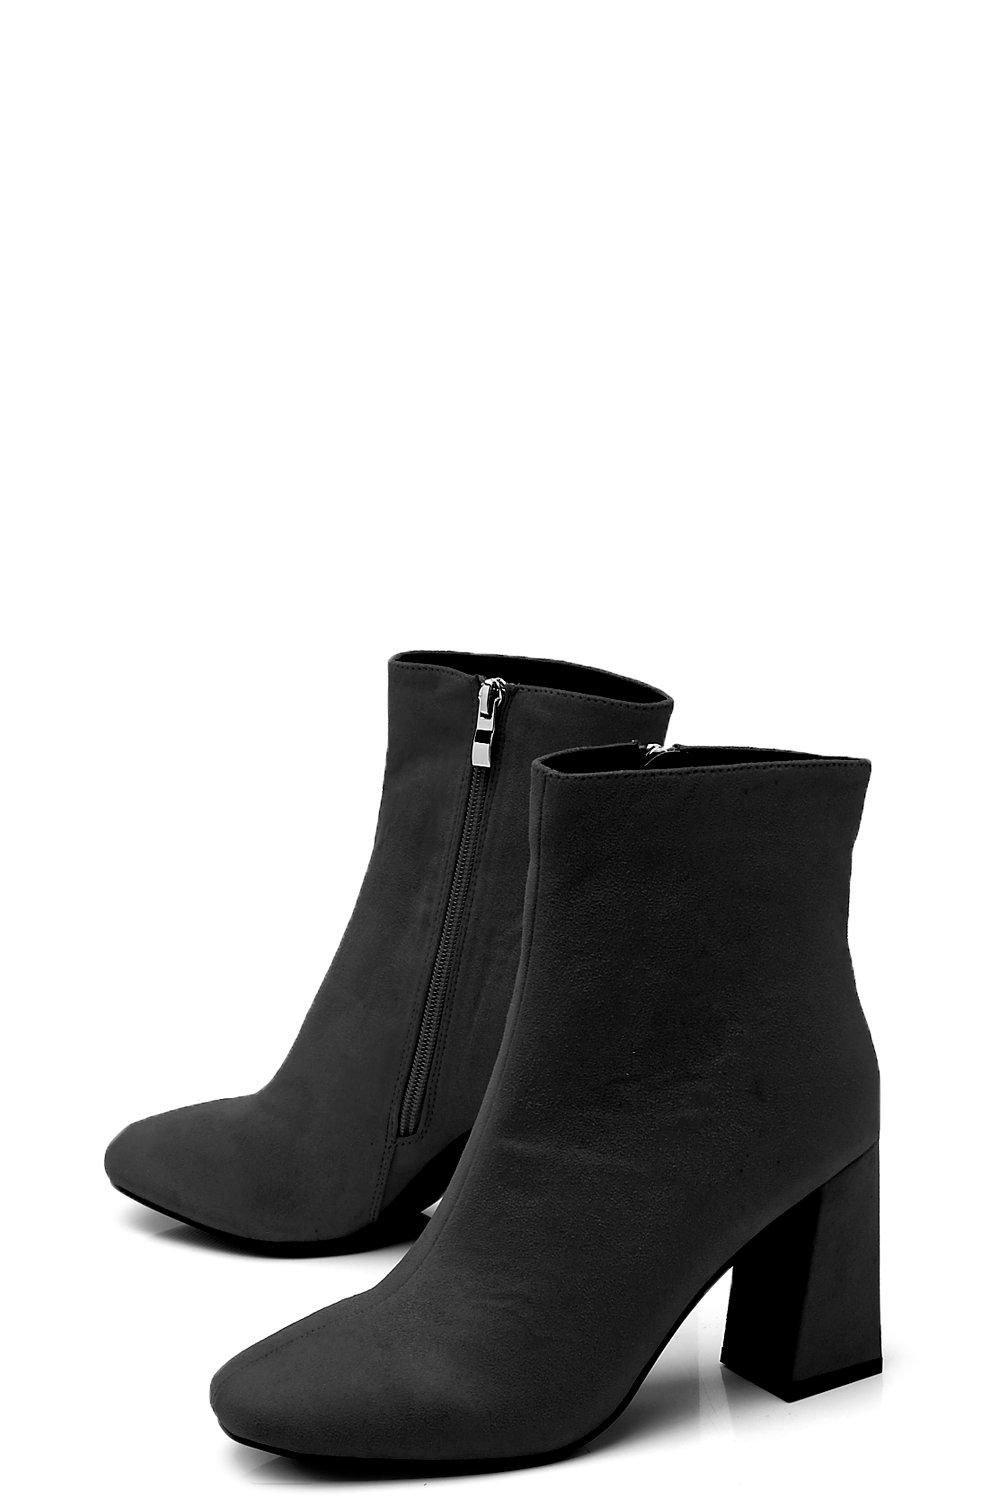 black square toe block heel boots